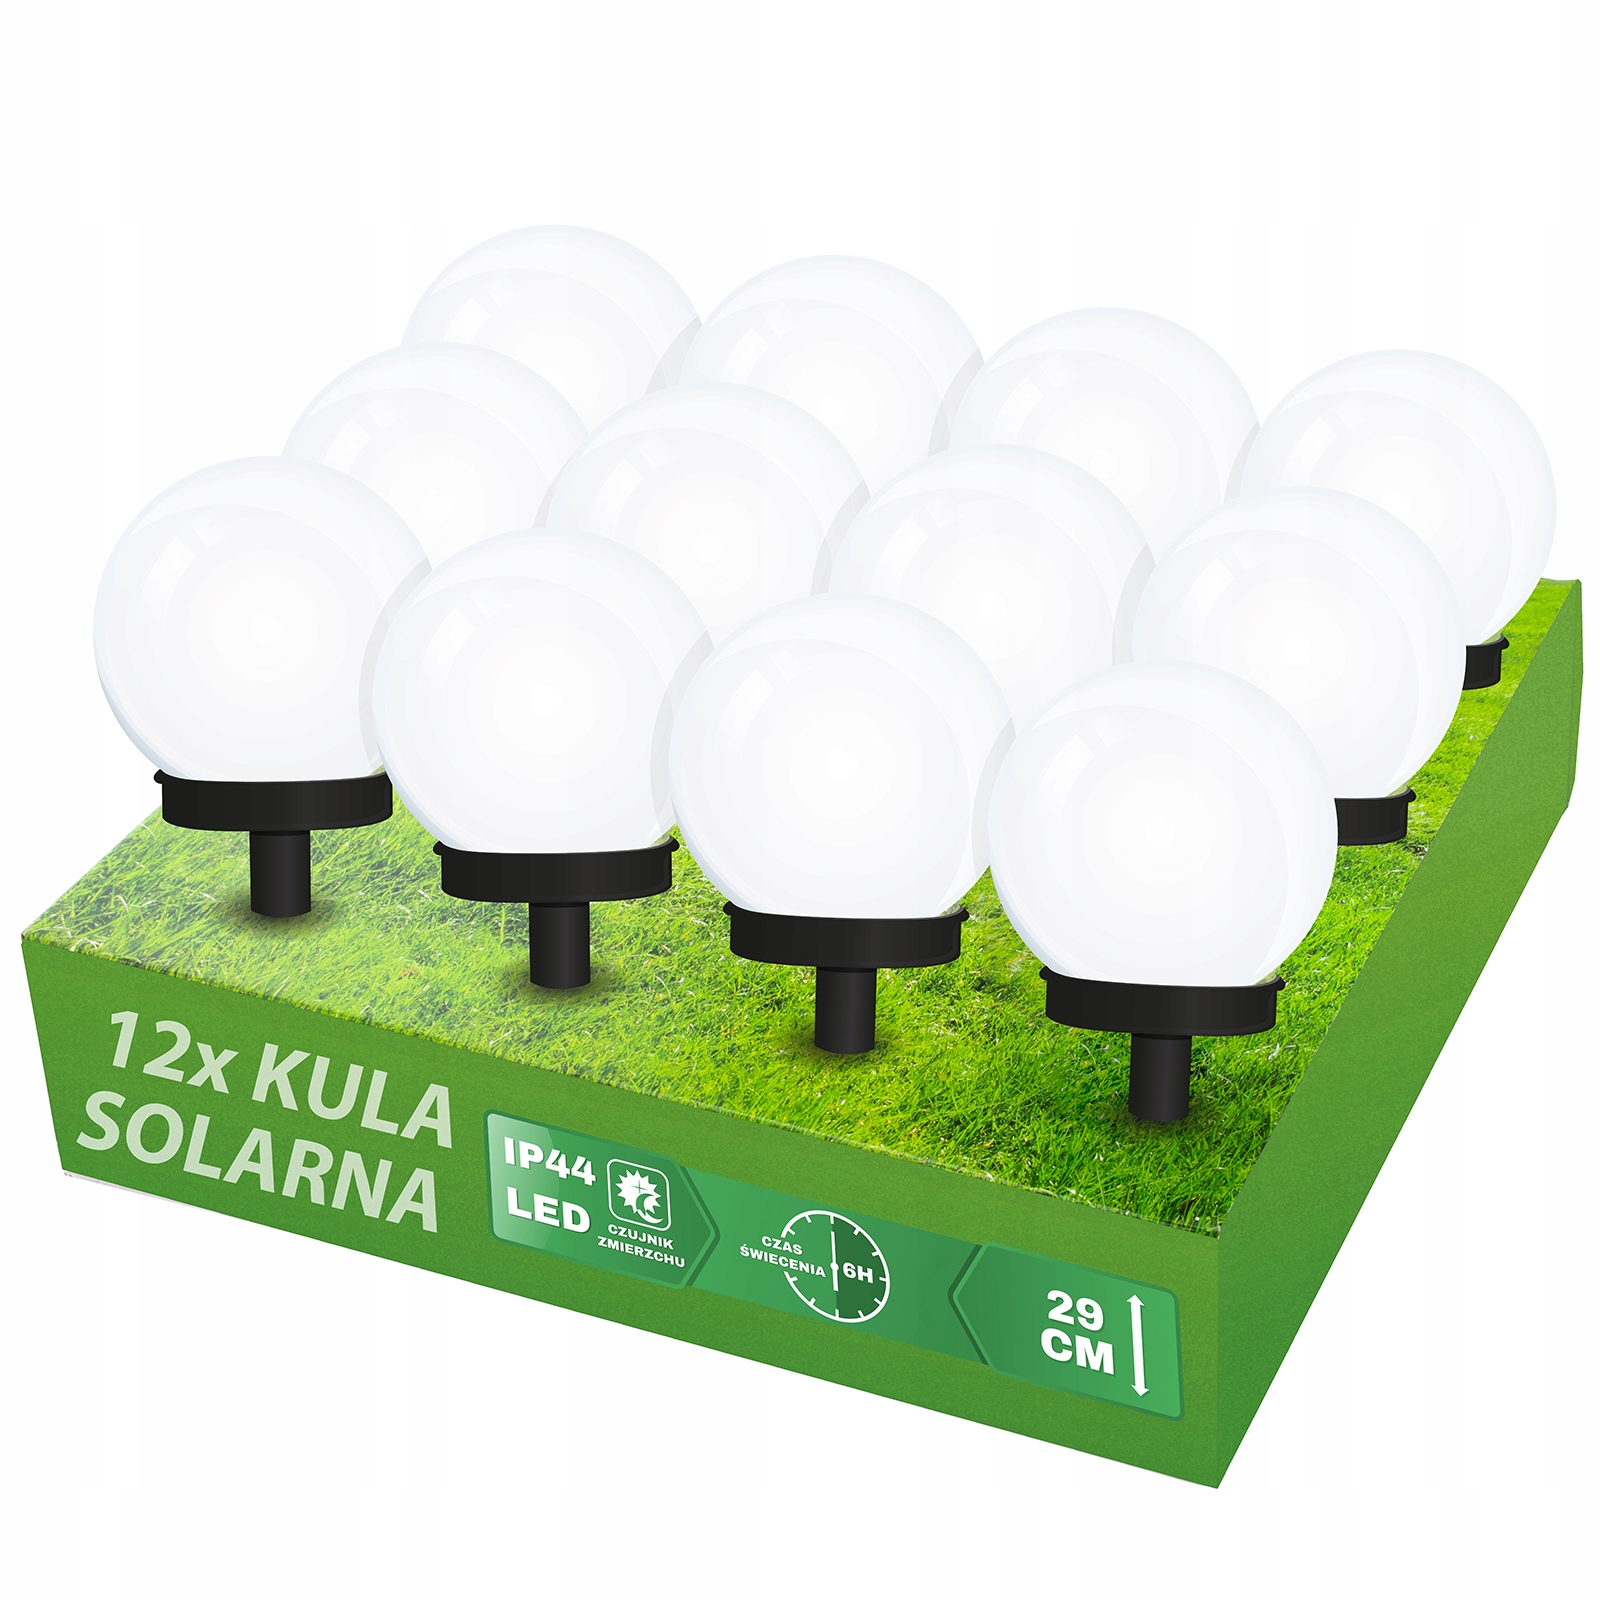 12x Lampa SOLARNA wbijana LED KULA biała 10 CM